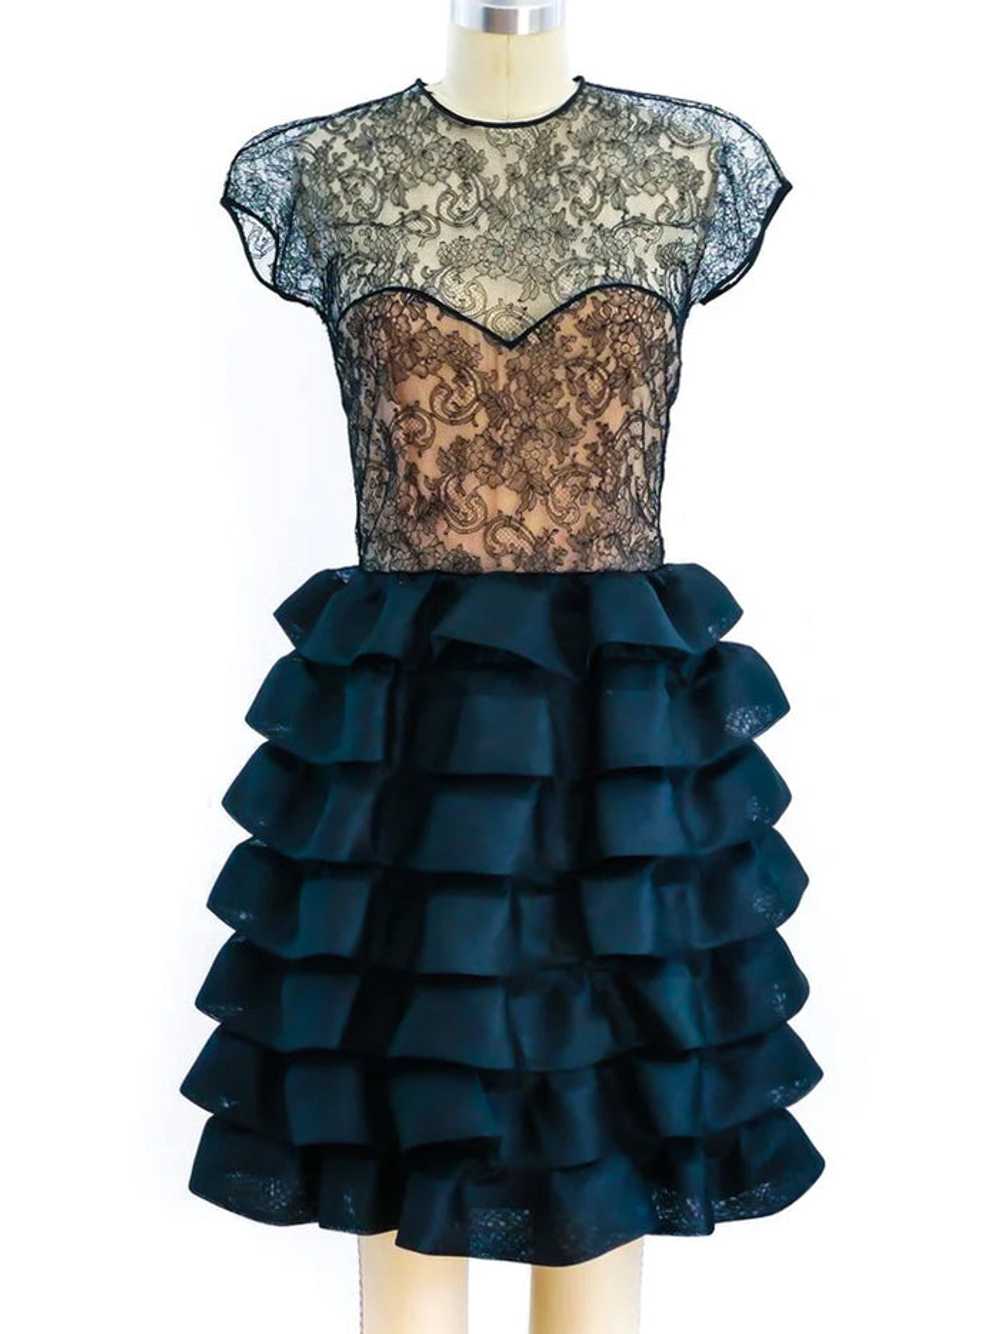 Oscar de la Renta Ruffle Lace Dress - image 1